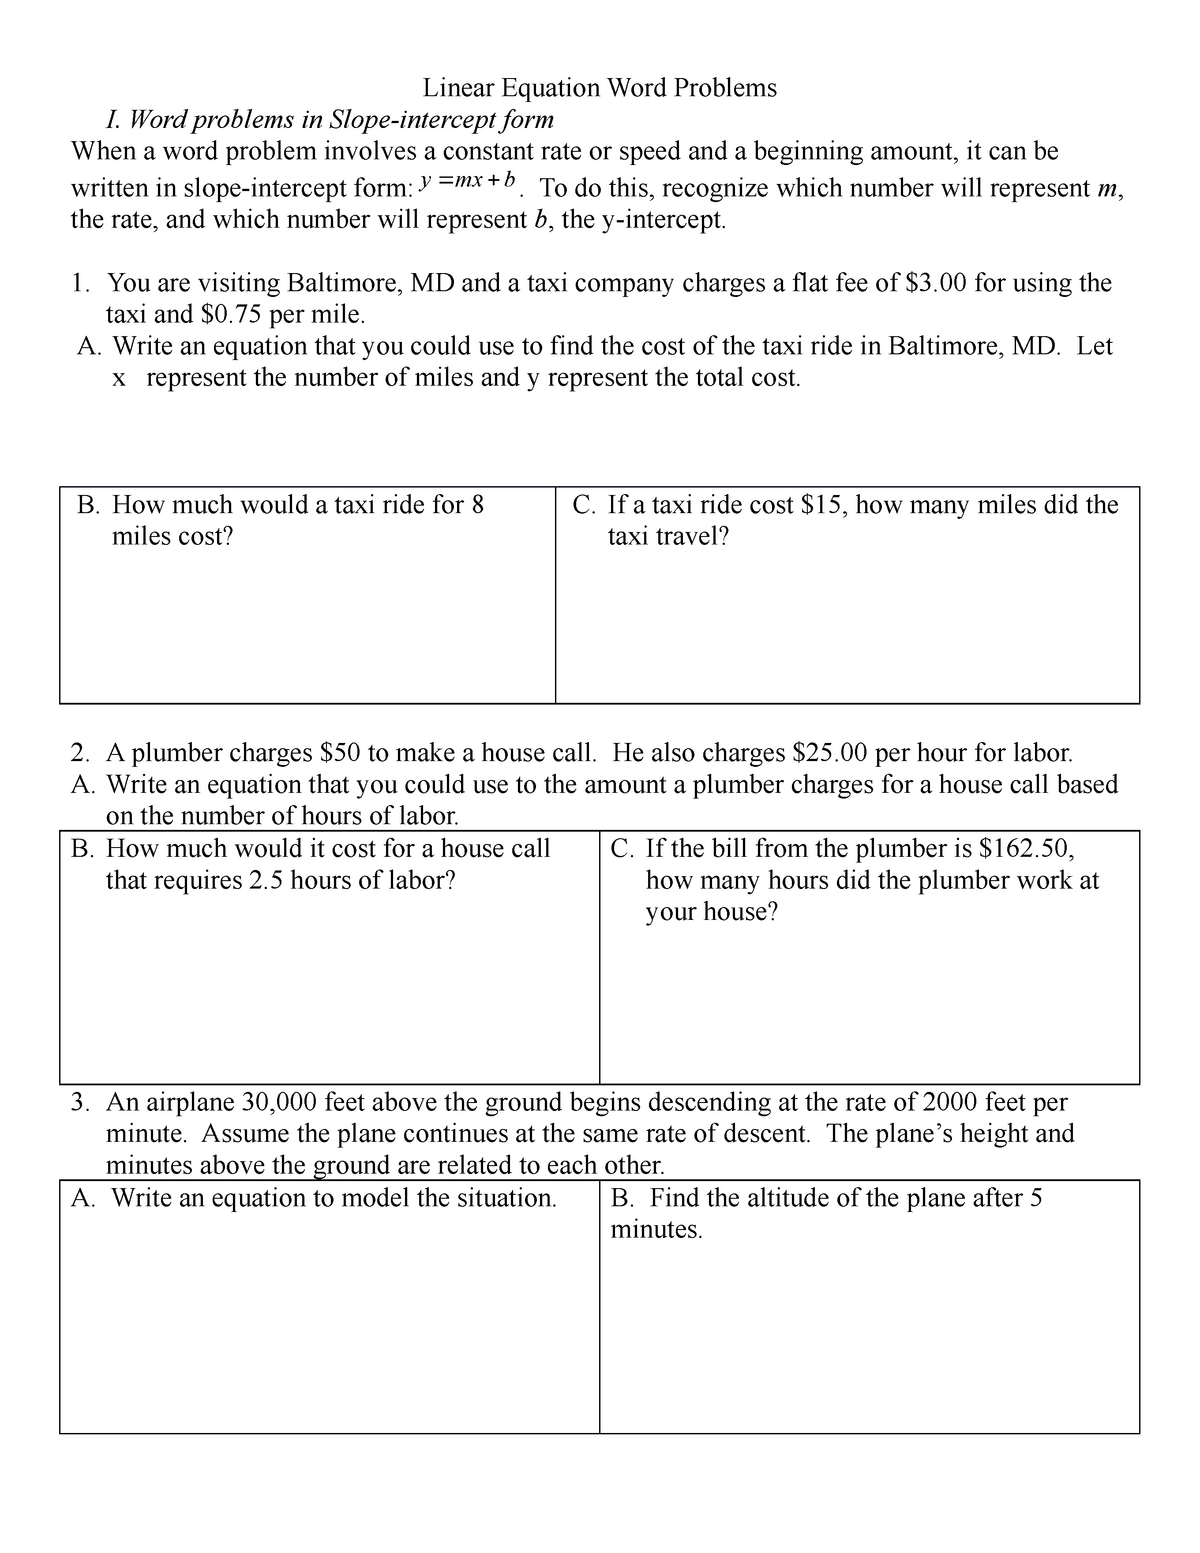 Linear Word Problems Worksheet